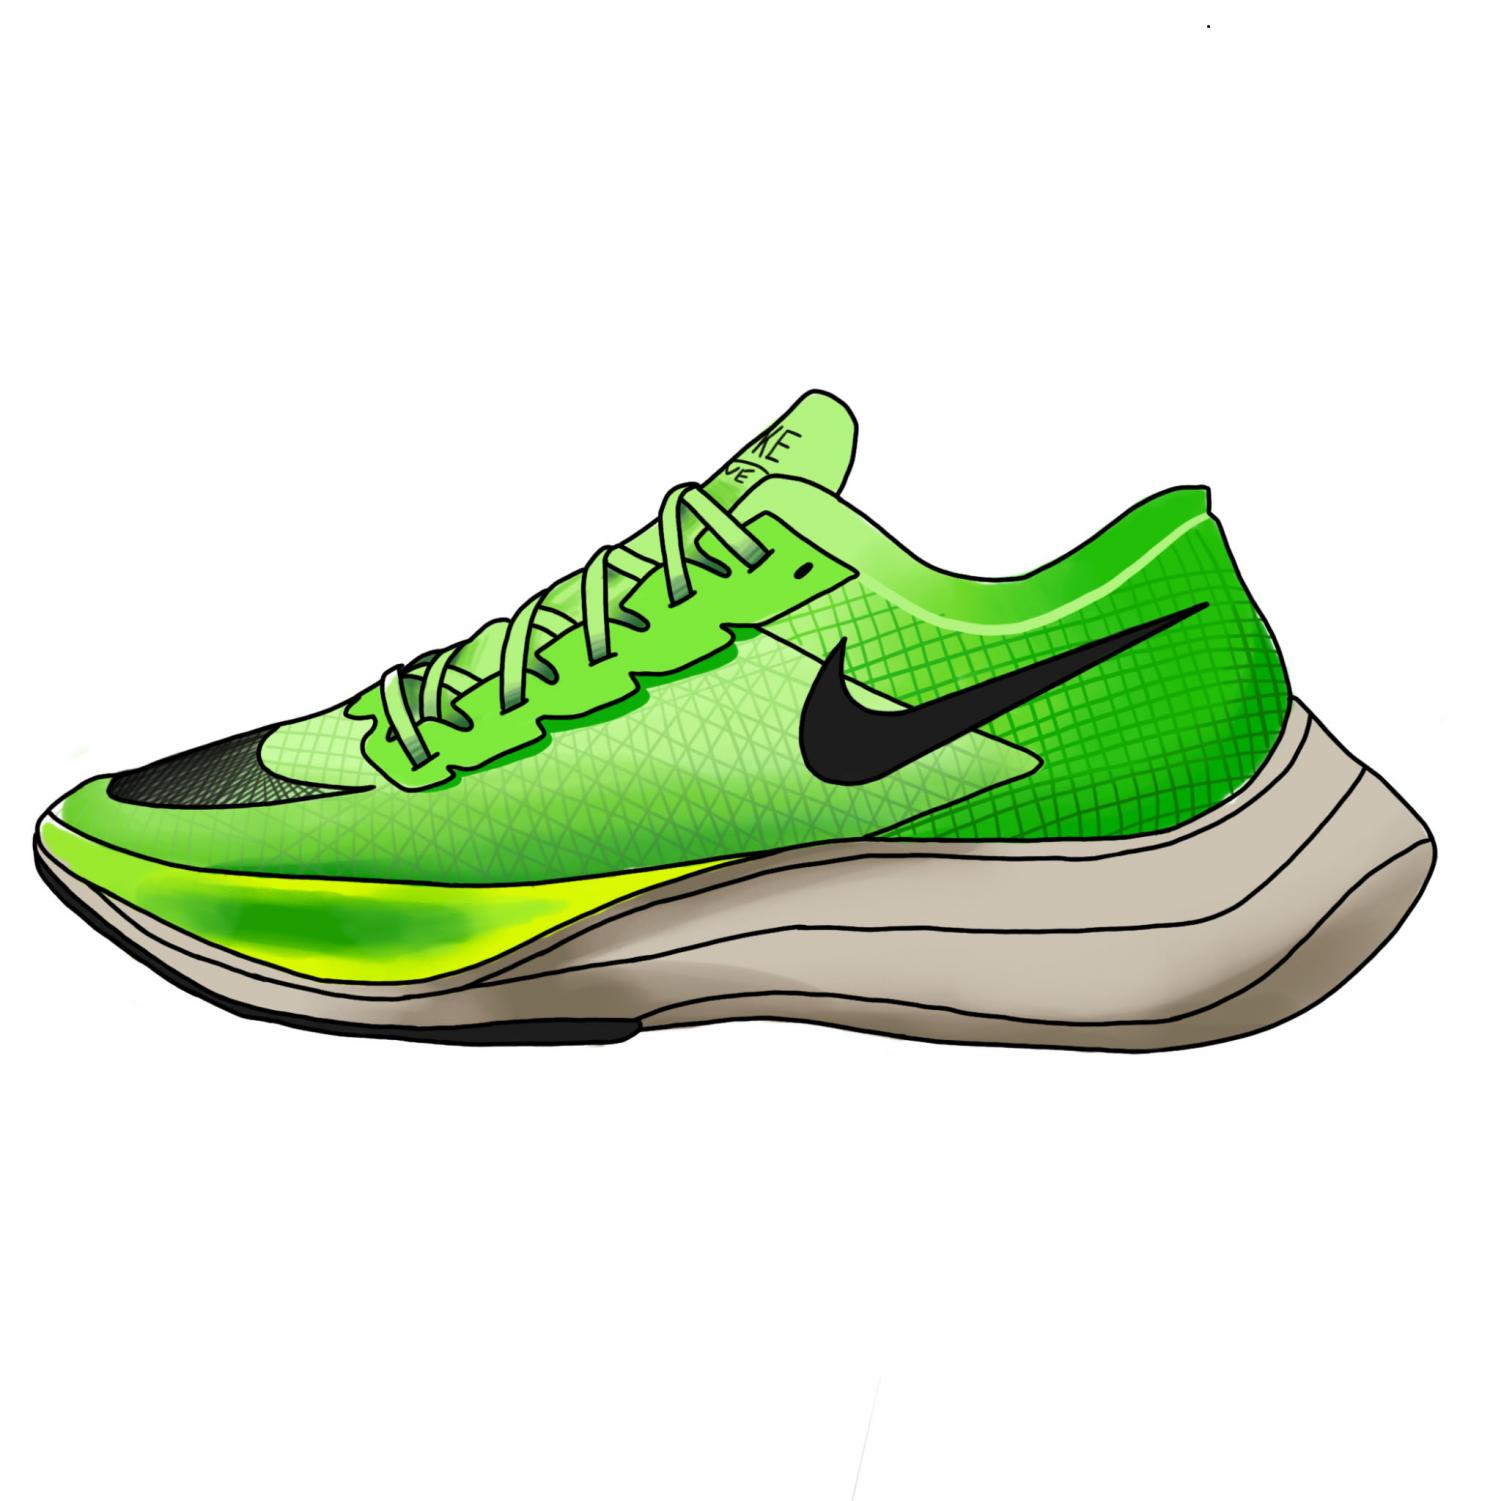 Kreek Hoge blootstelling zonsondergang World Athletics sets new regulations on running shoes – the Epic